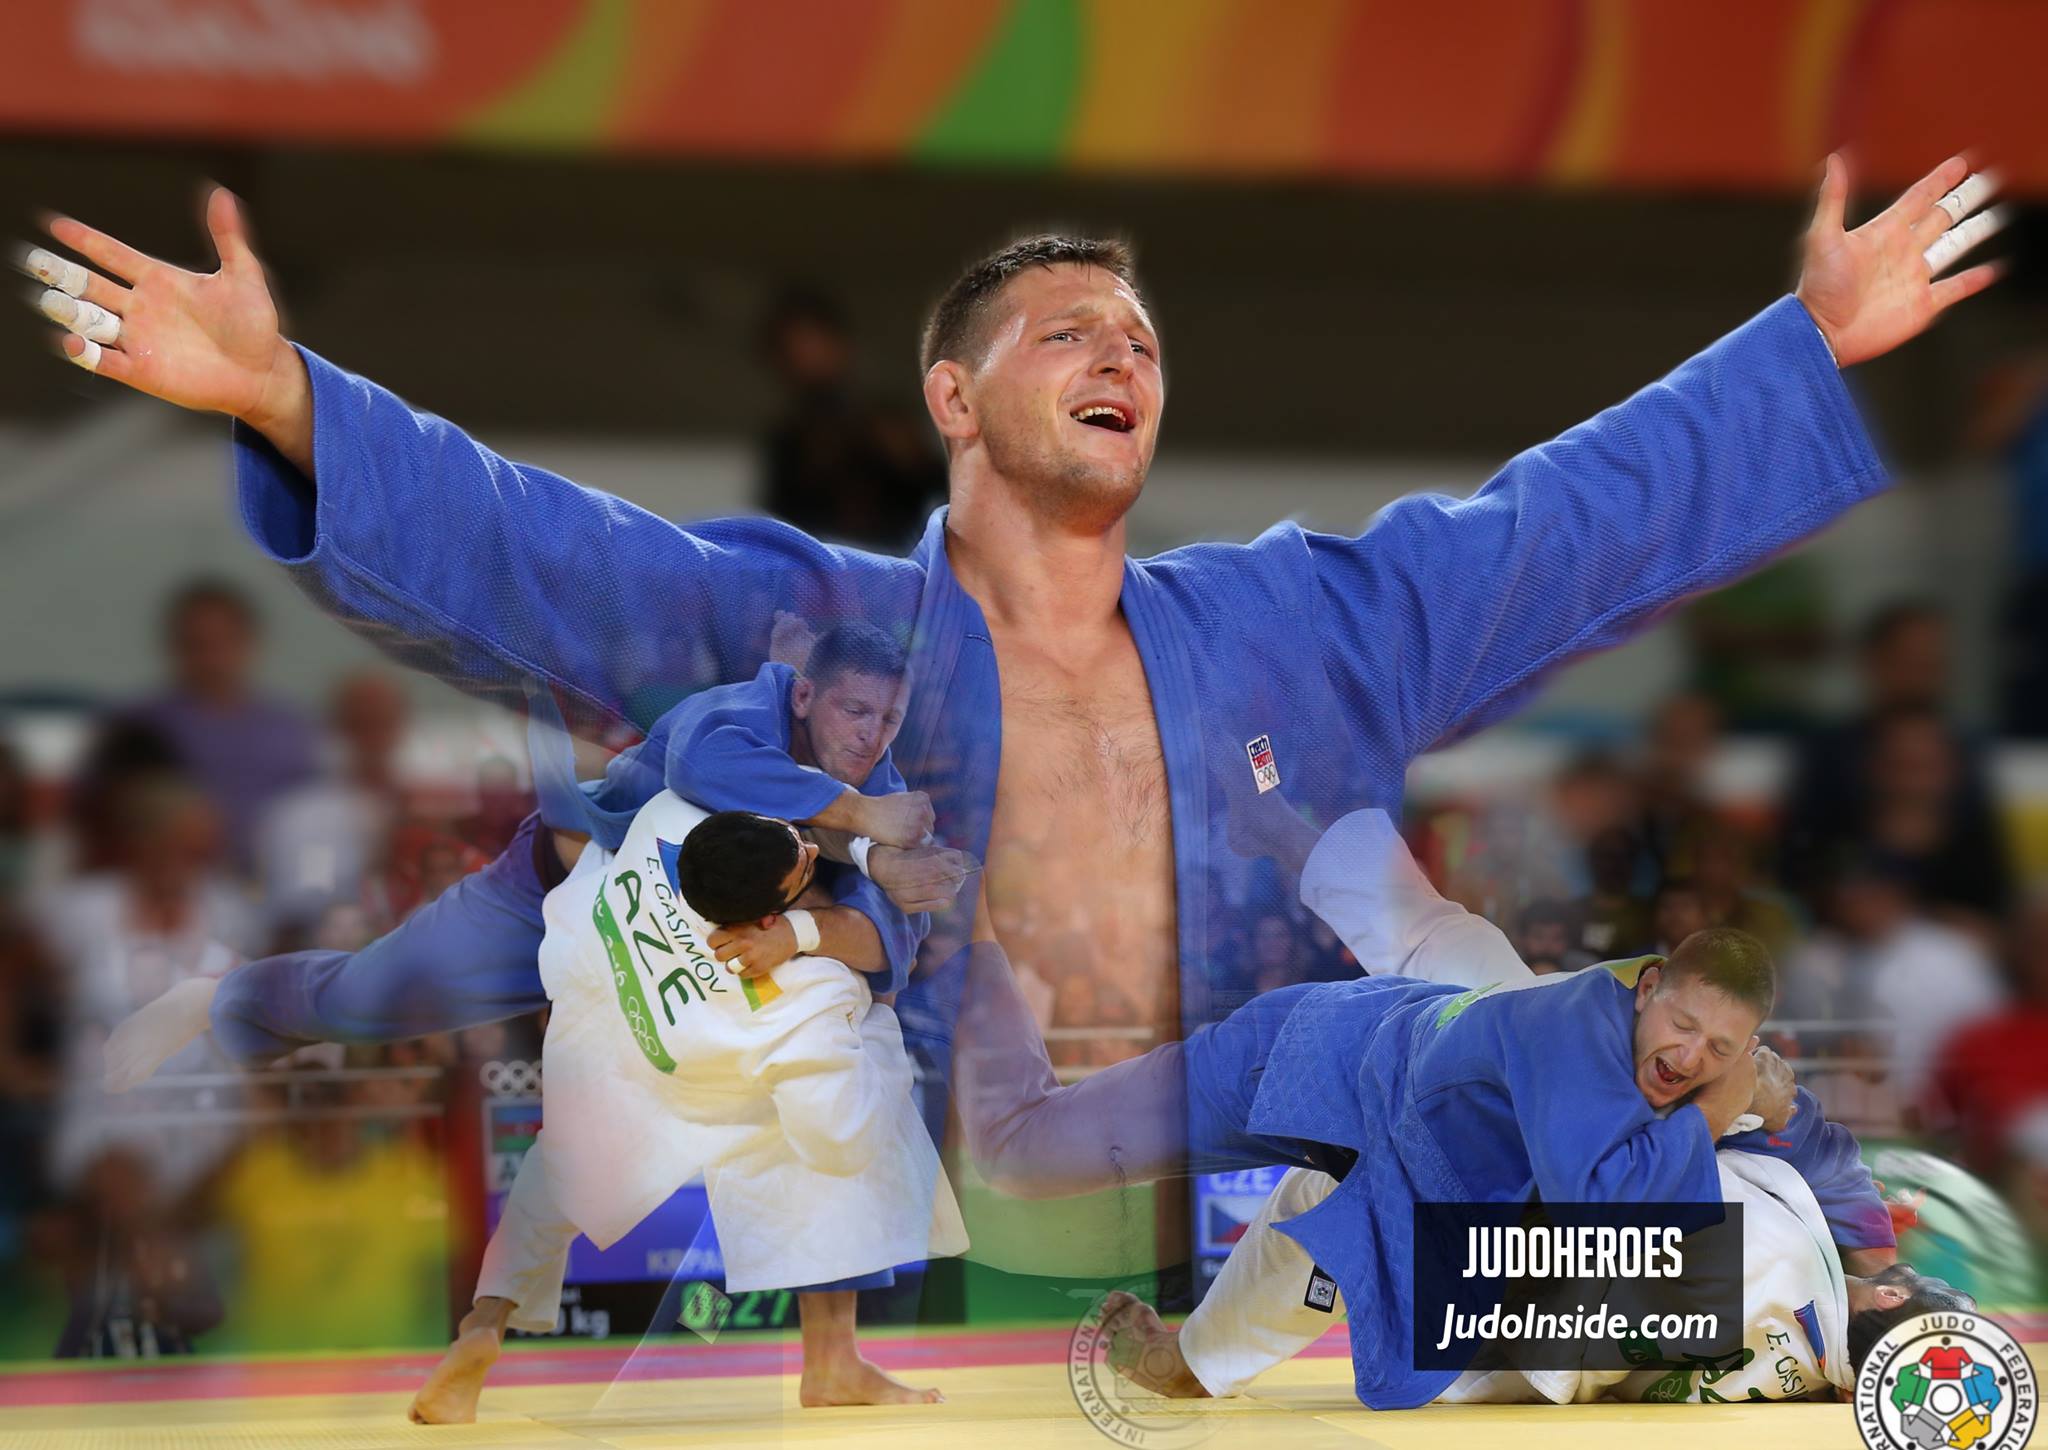 Judoinside News Lukas Krpalek Won A Historic Medal For Czech Republic